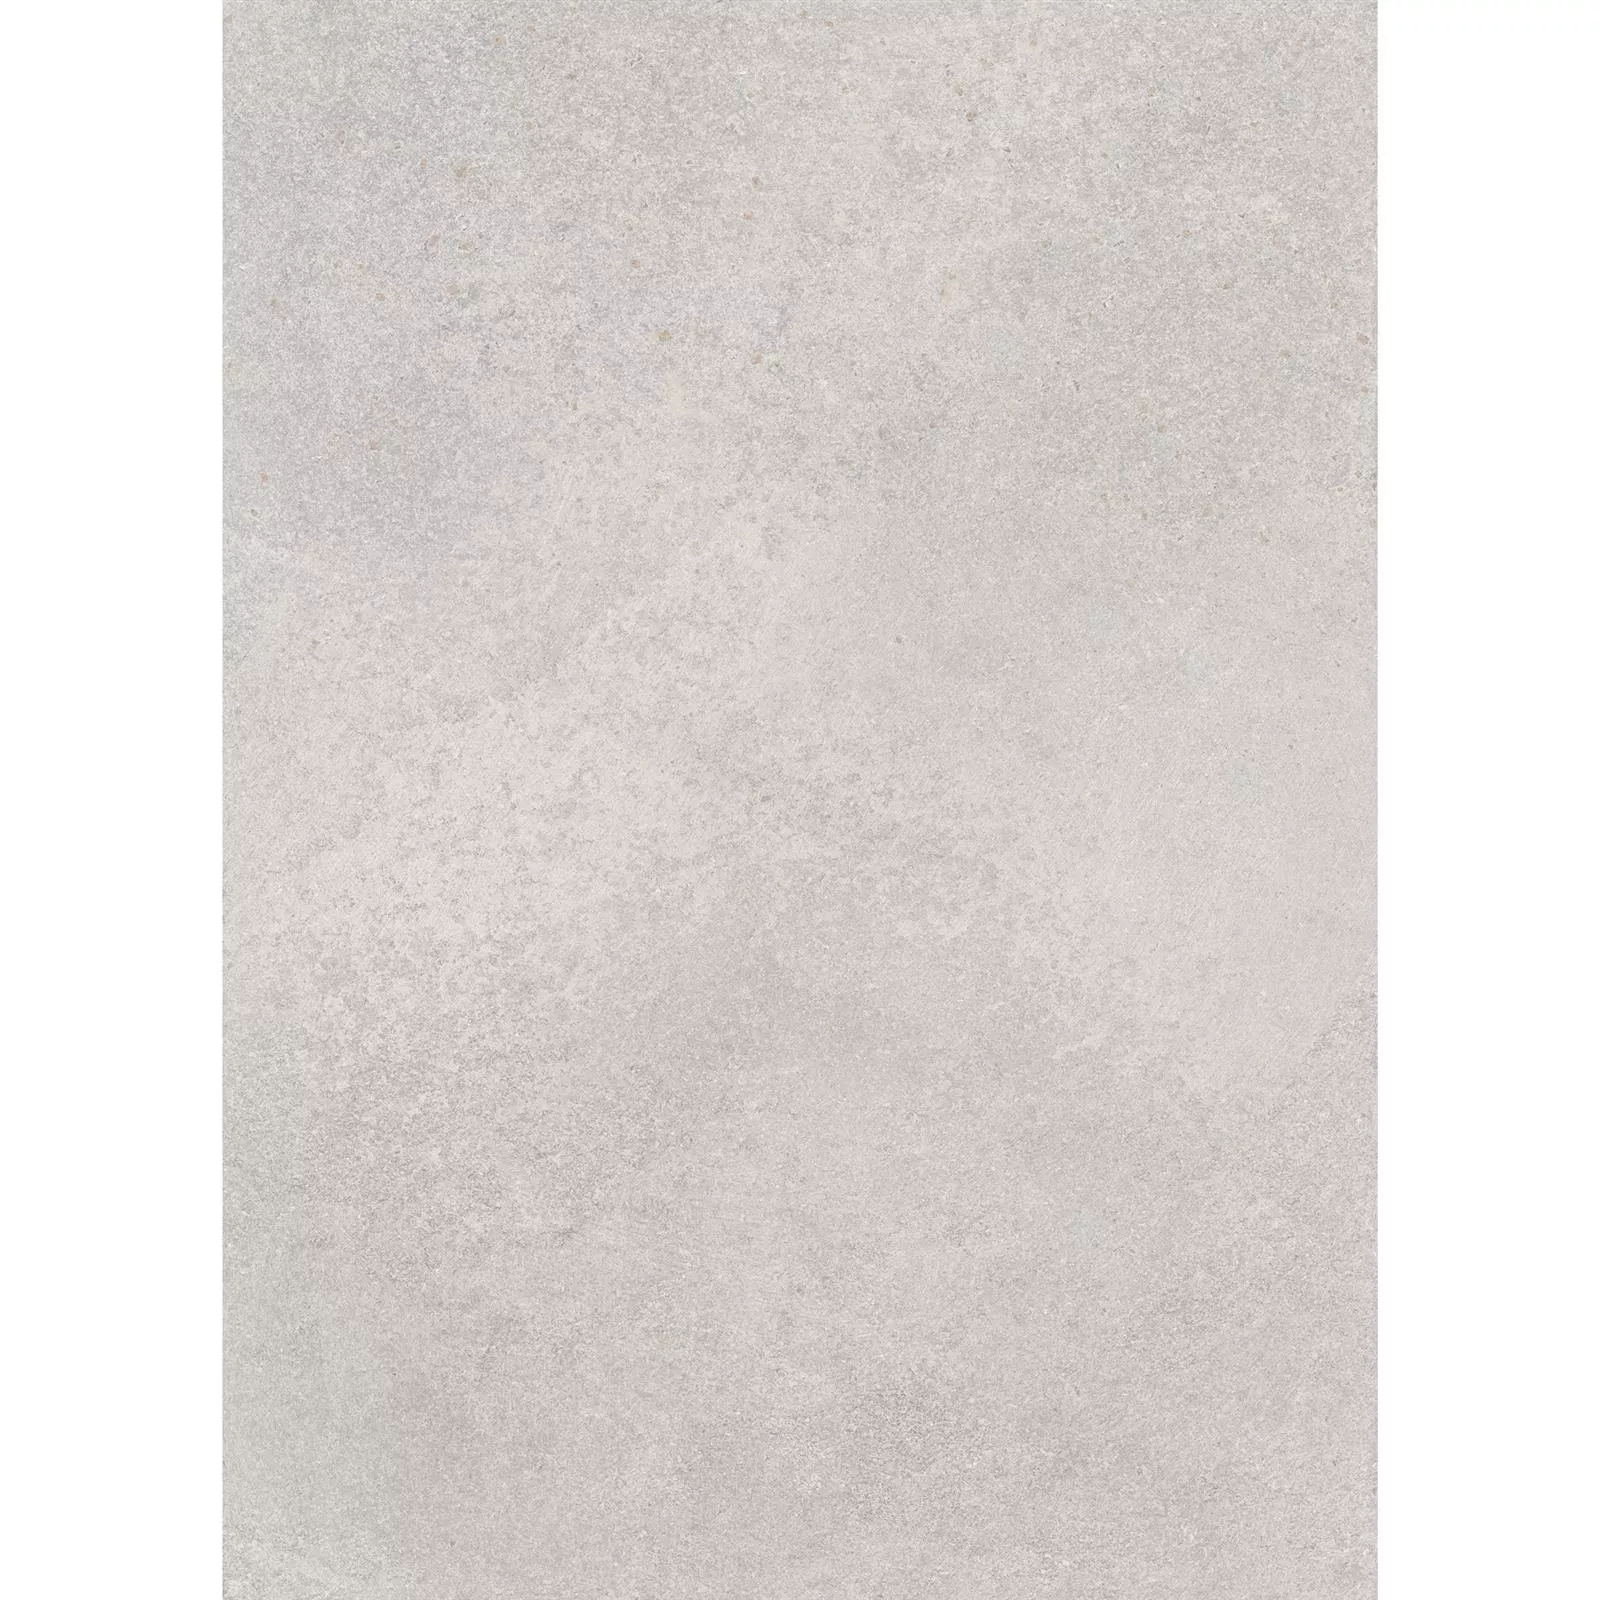 Ladrilhos Olhar de Pedra Horizon Cinza 60x120cm